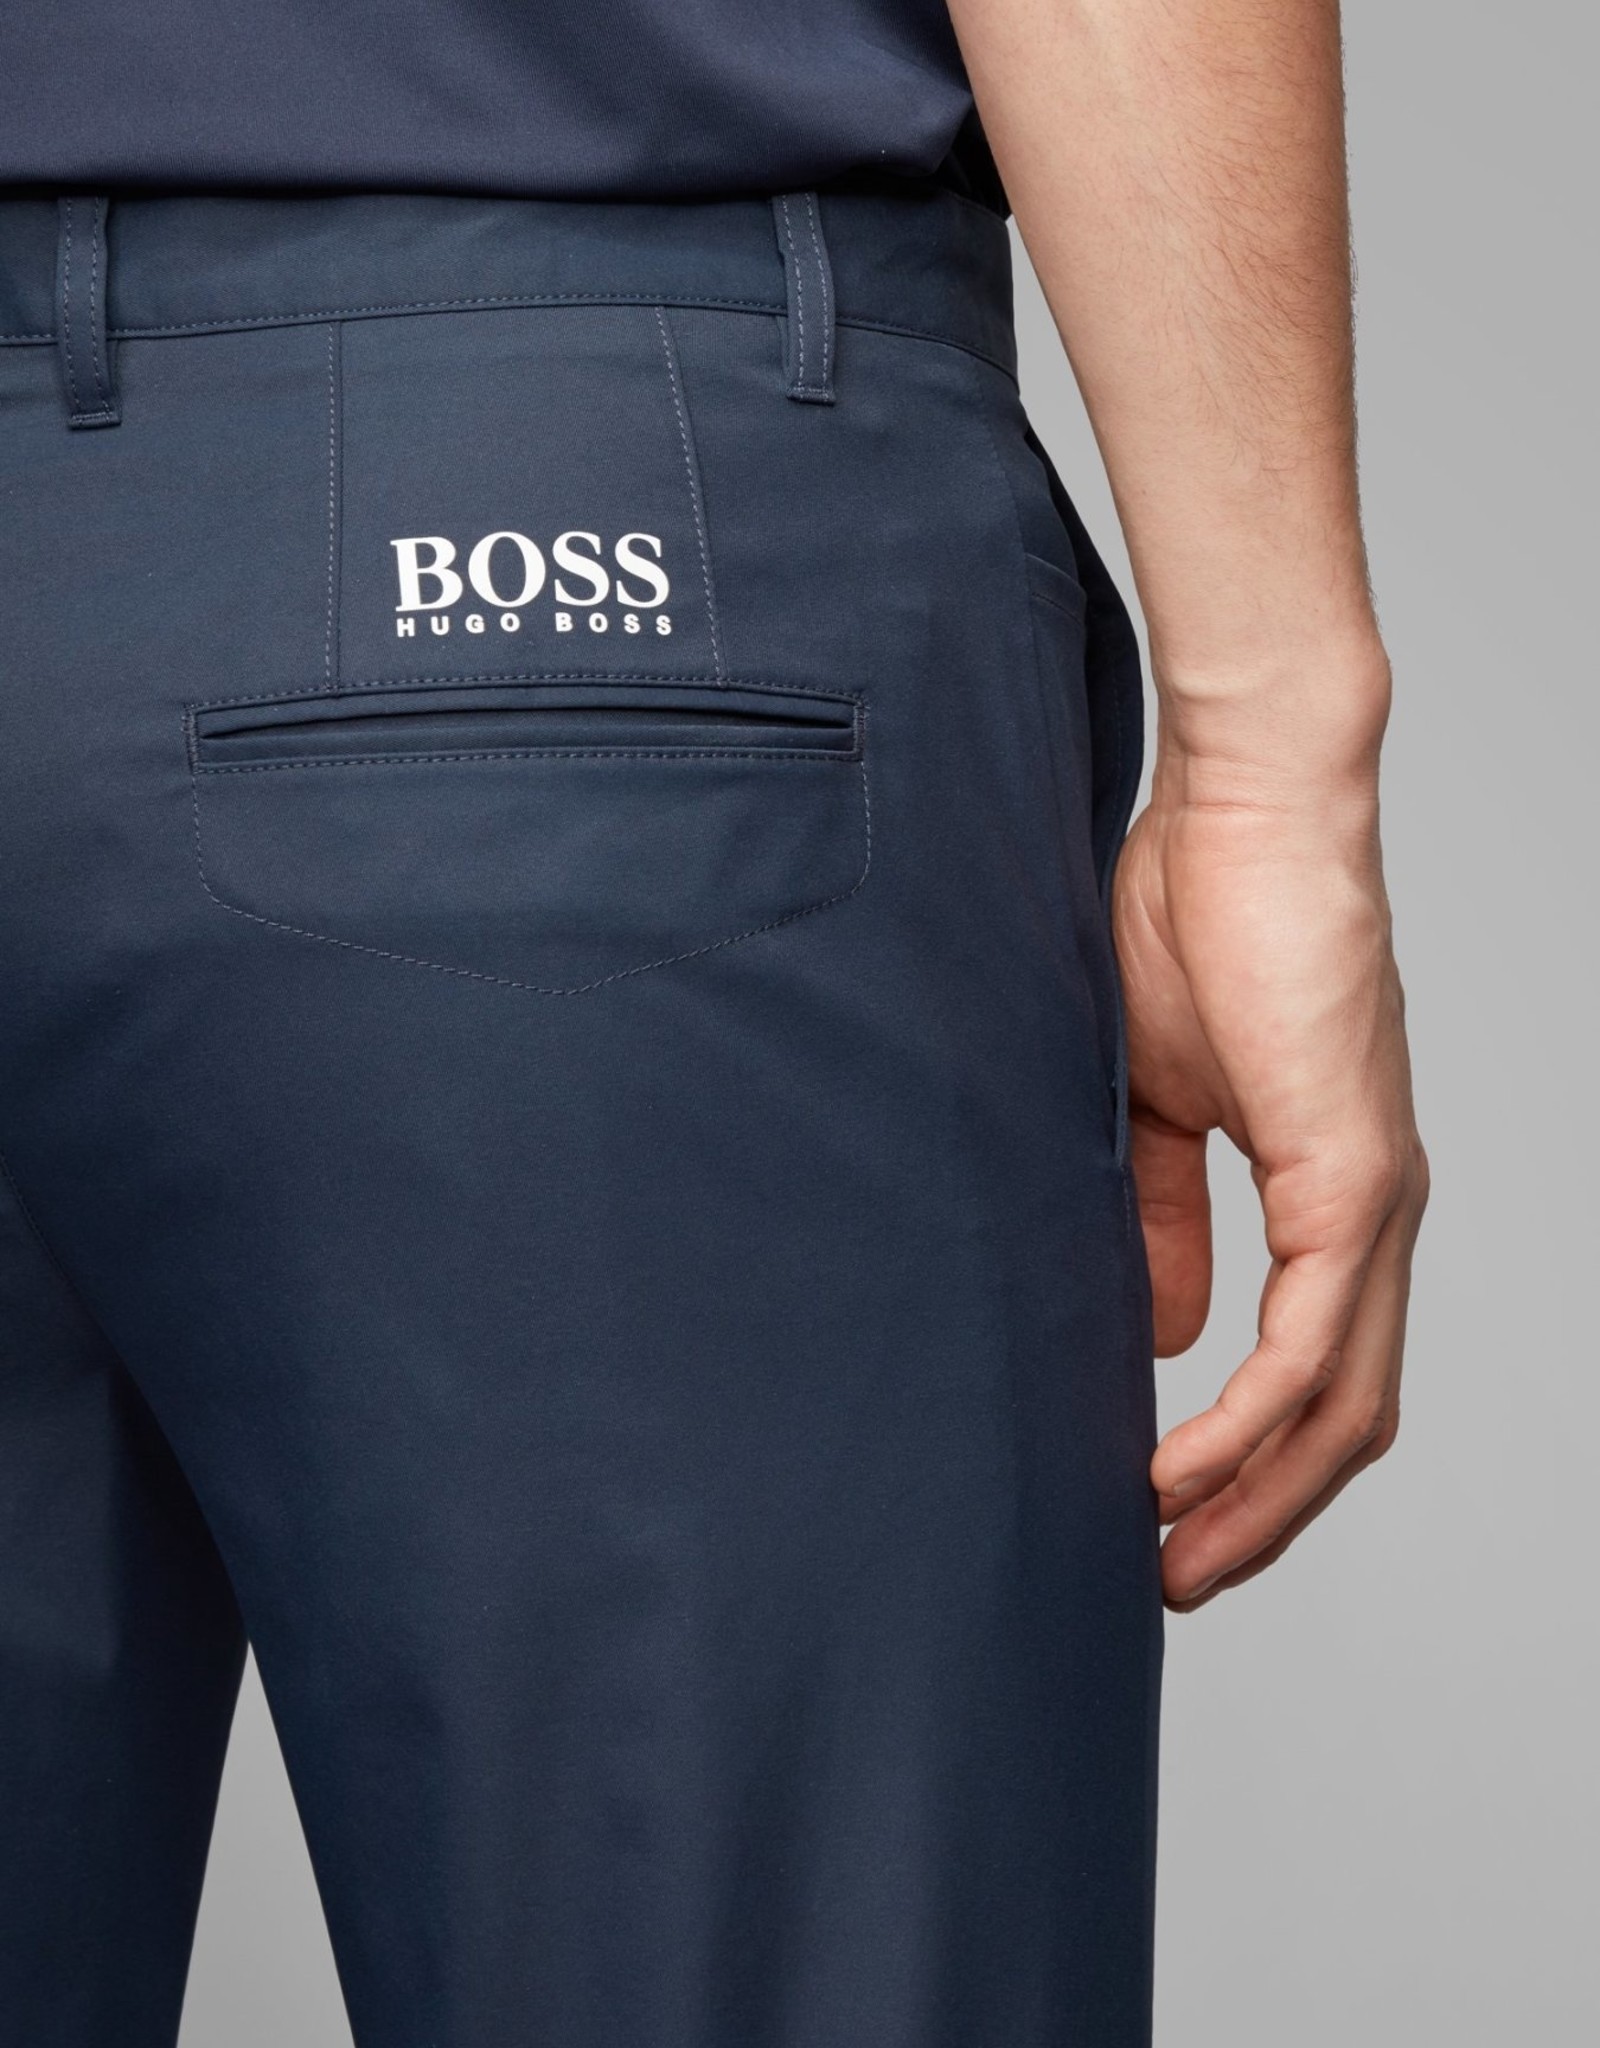 hugo boss golf pants Cheaper Than 